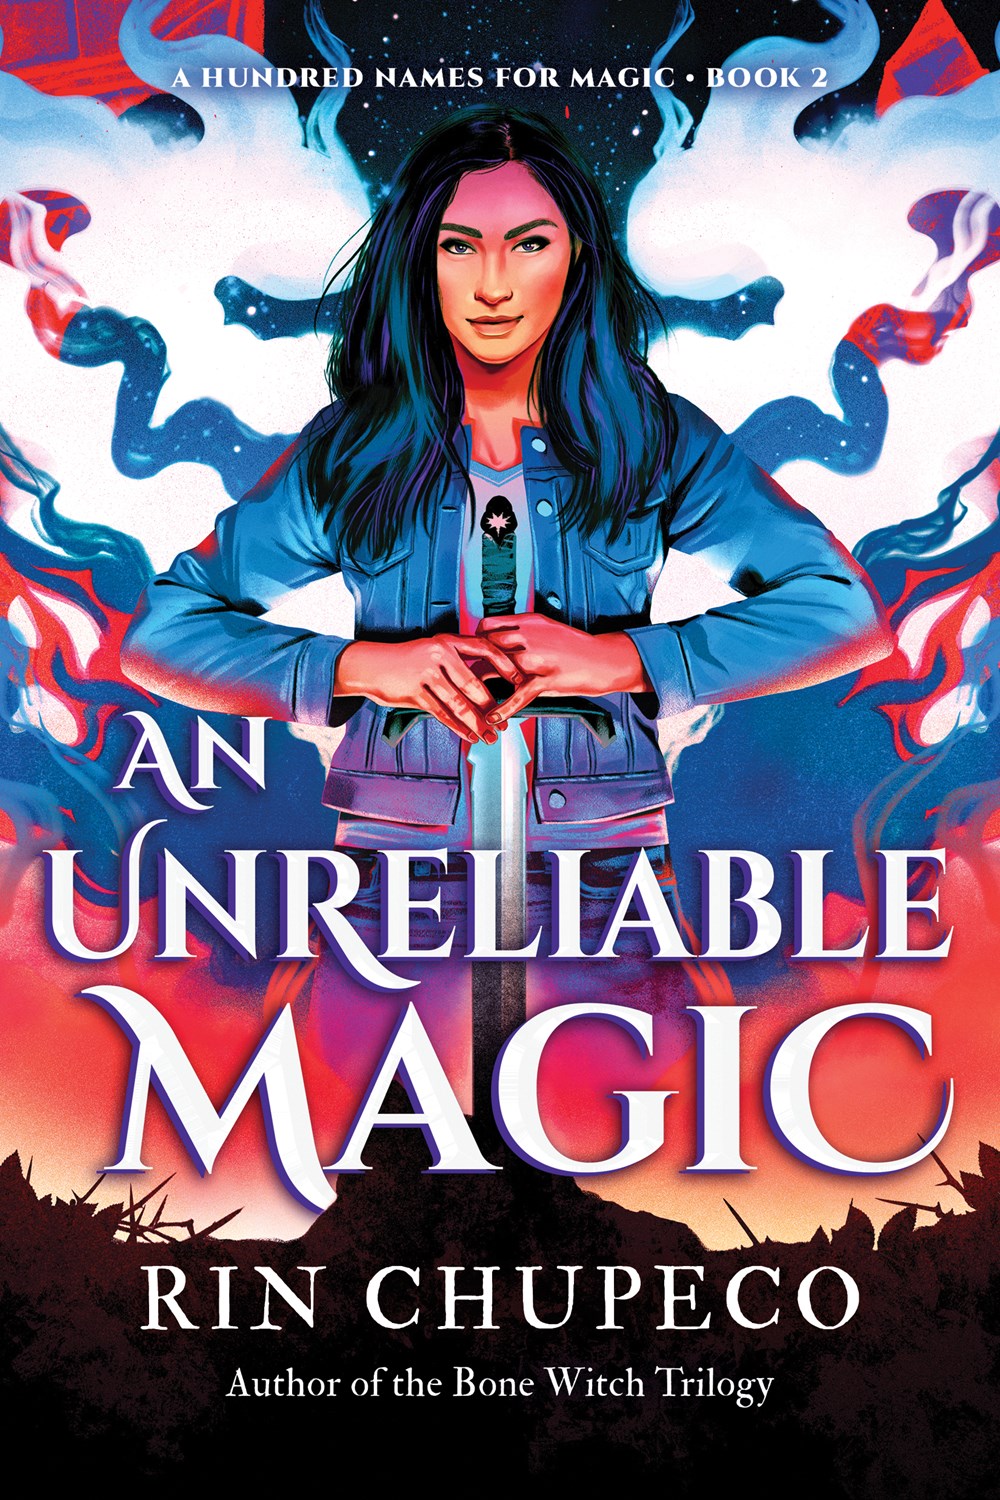 Cover for Rin Chupeco's 'An Unreliable Magic'